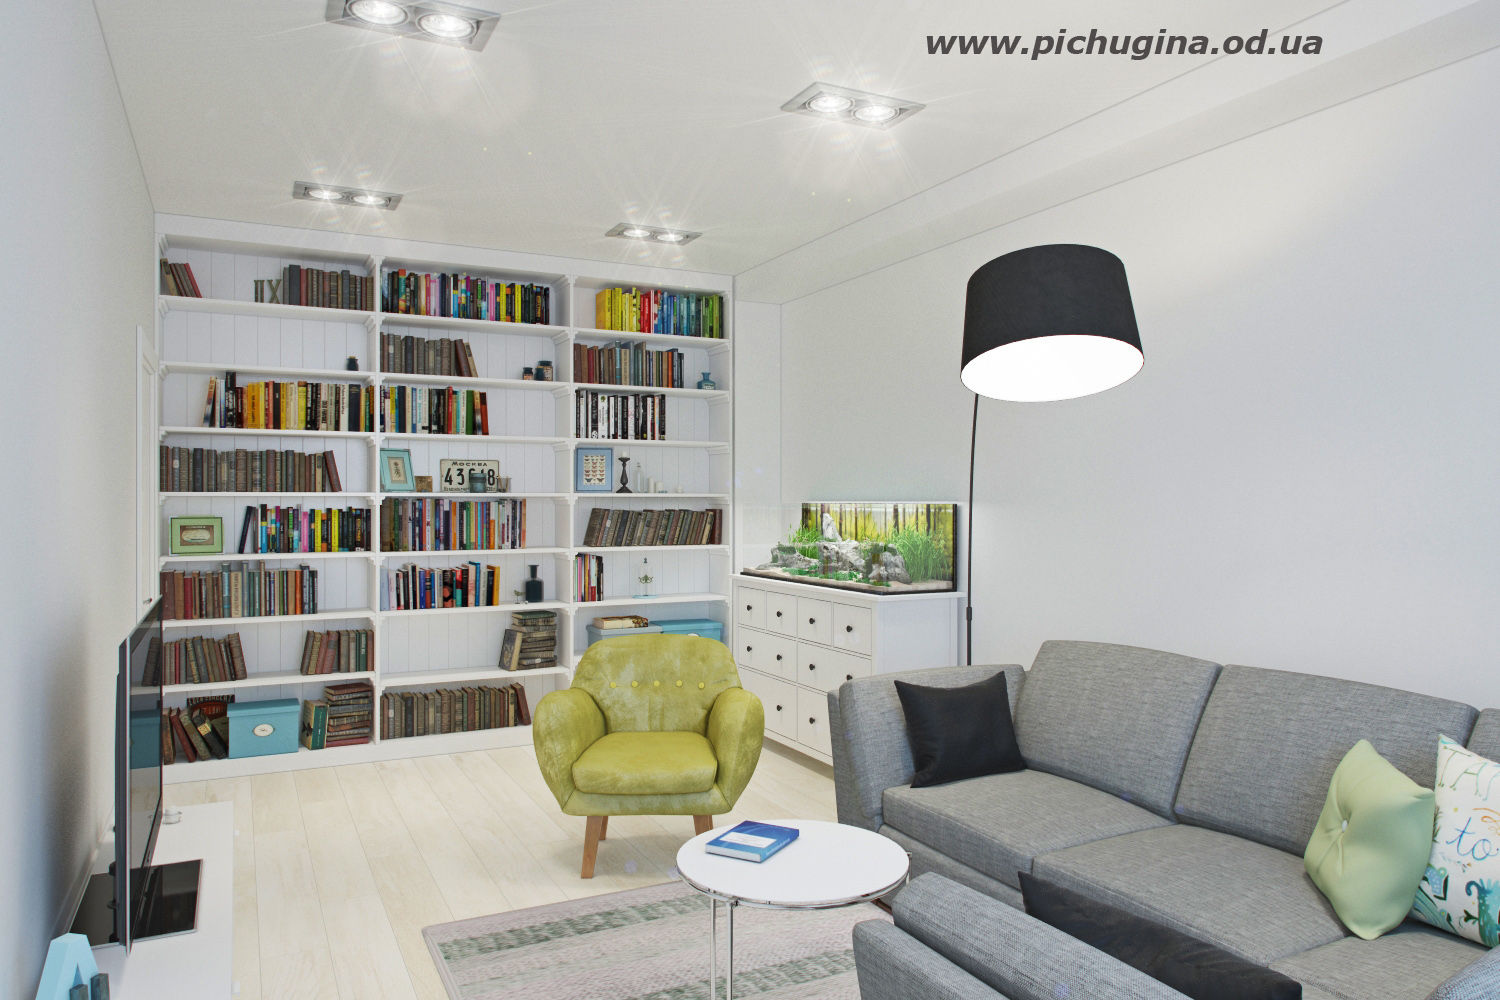 Квартира, 62 м.кв. 2014 г, Tеtіana Pichugina Tеtіana Pichugina Scandinavian style living room